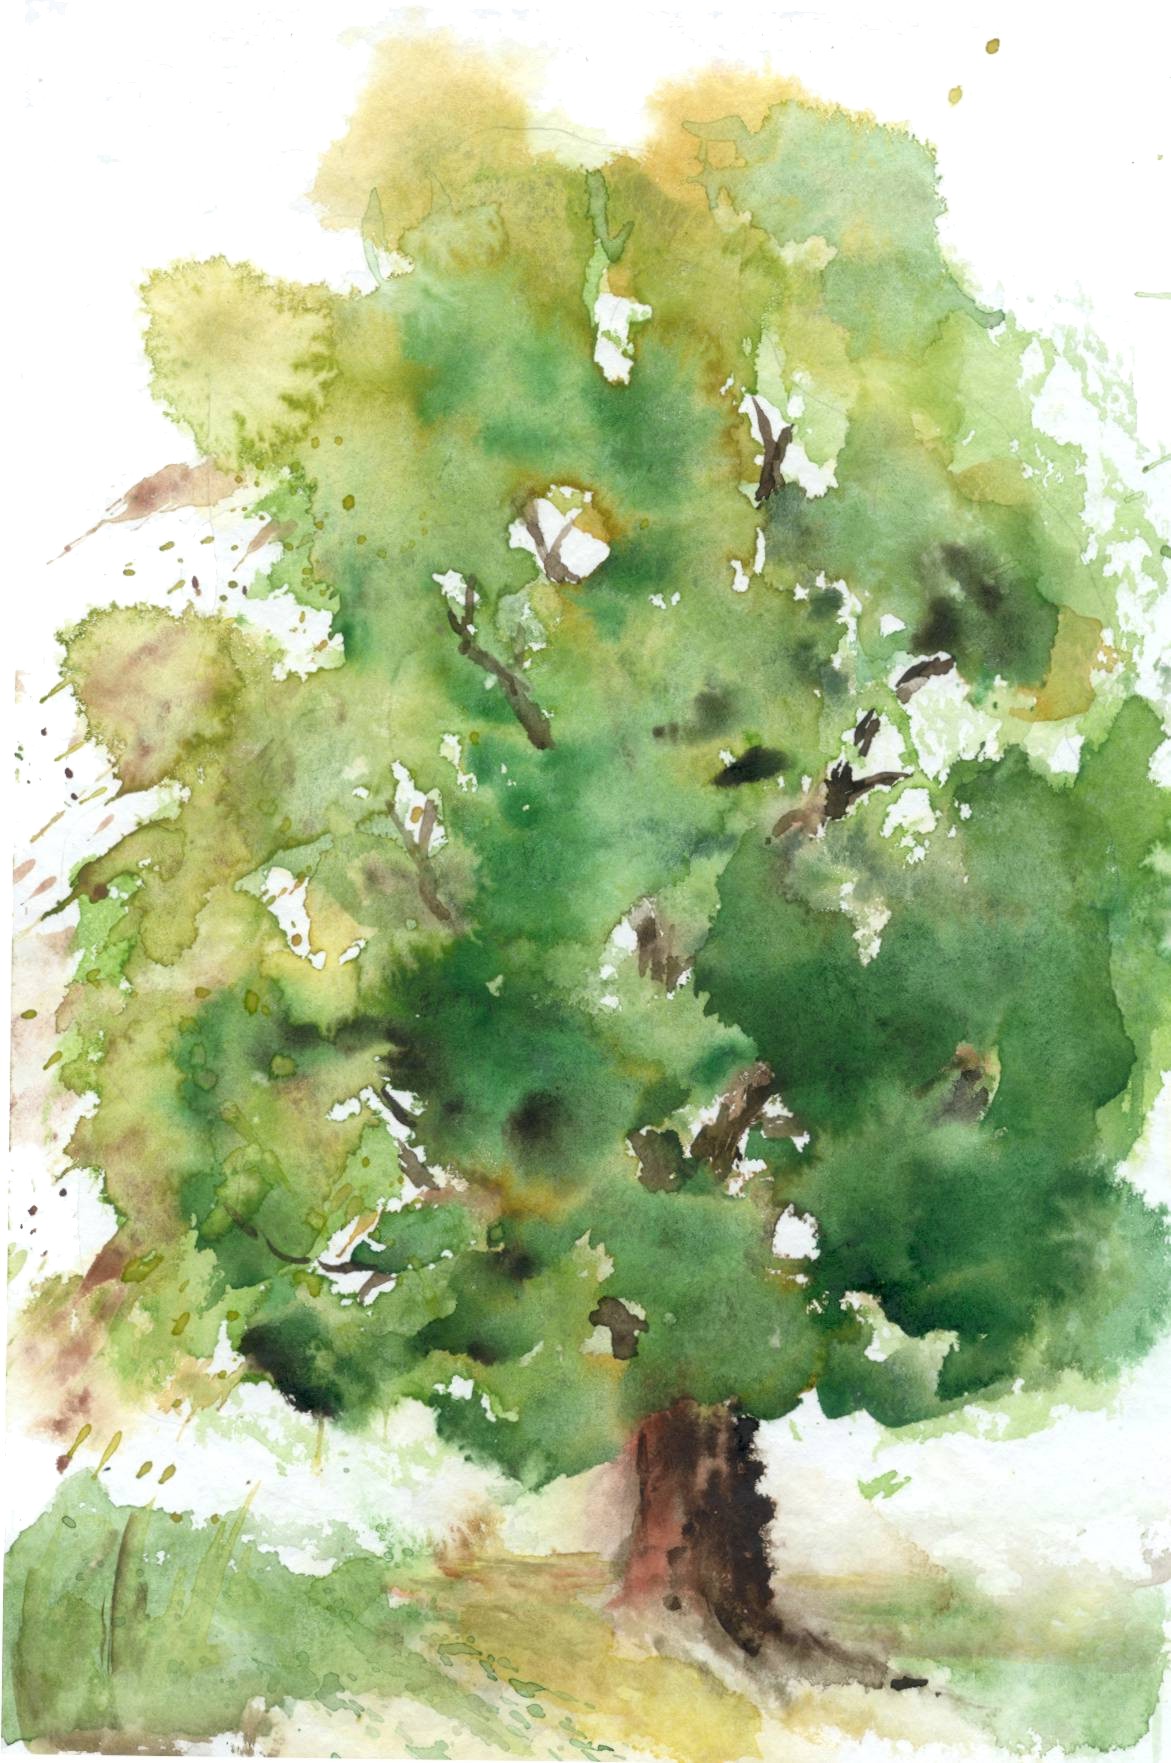 Maulbeerbaum